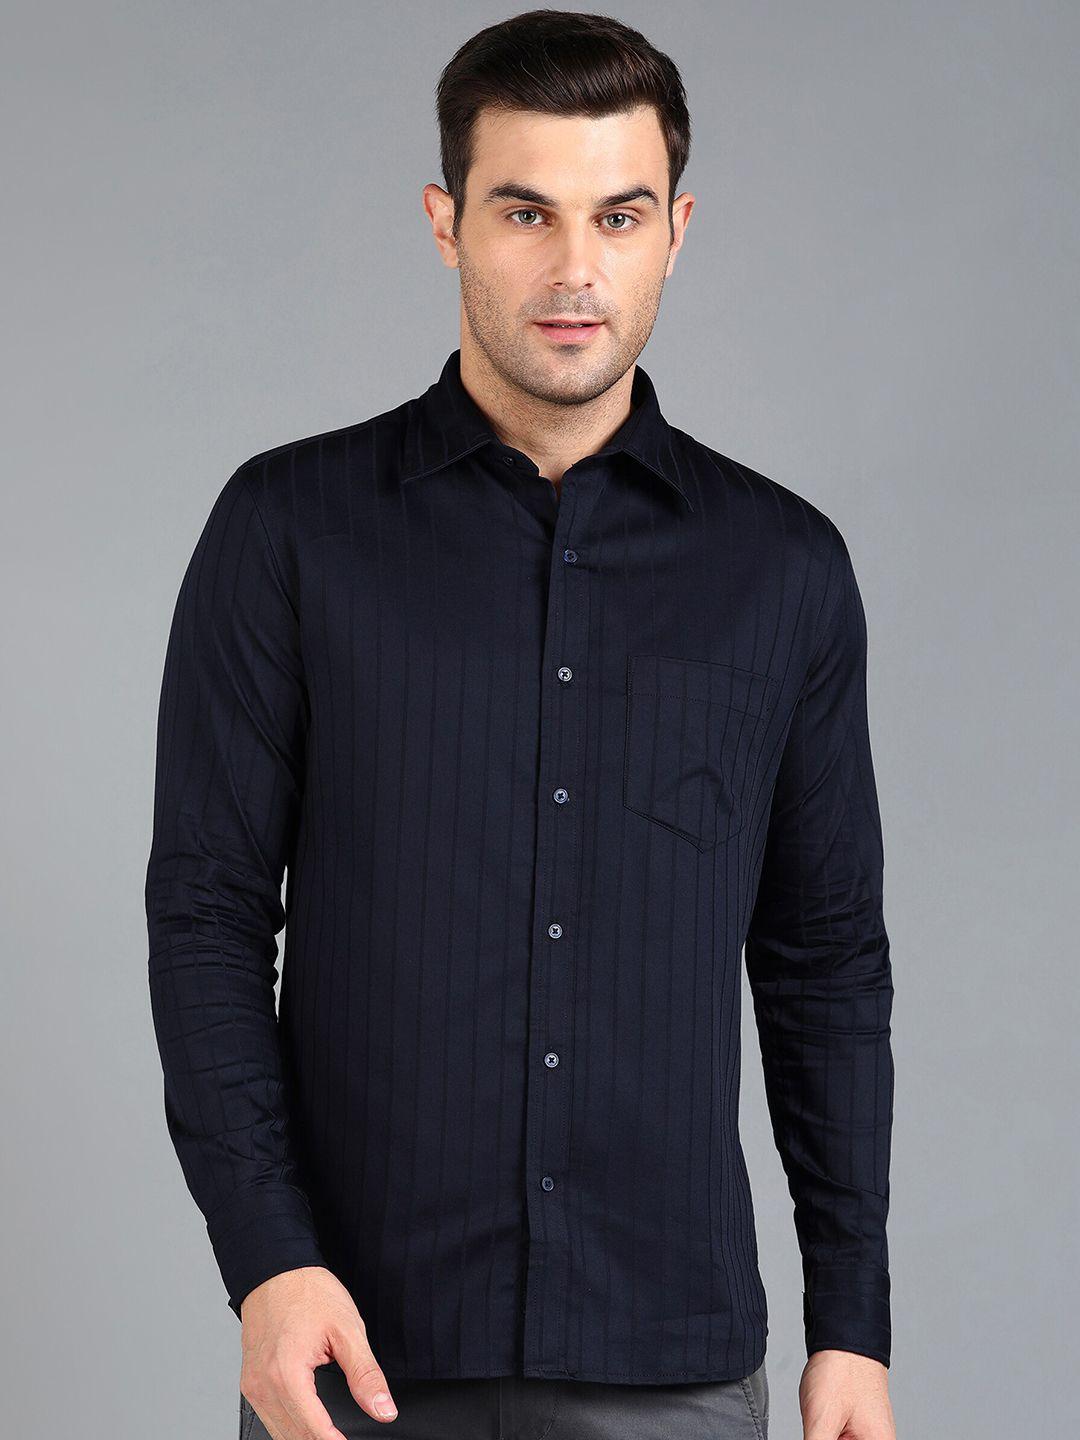 znx-clothing-men-blue-premium-slim-fit-opaque-striped-formal-shirt